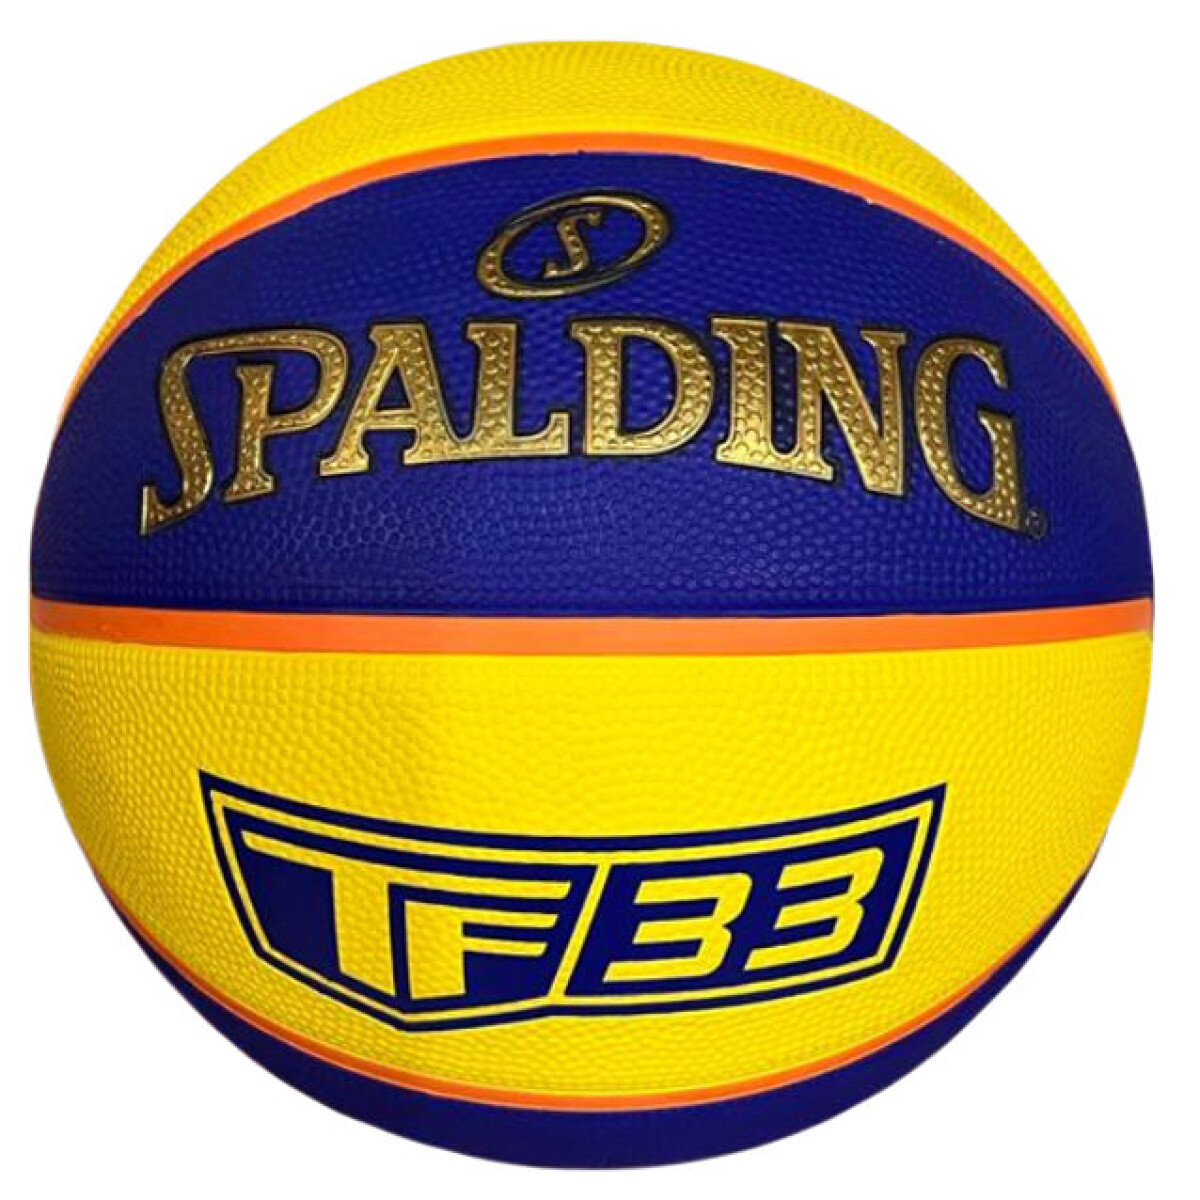 Pelota Basket TF 33 Spalding - Amarillo/Azul/Naranja 